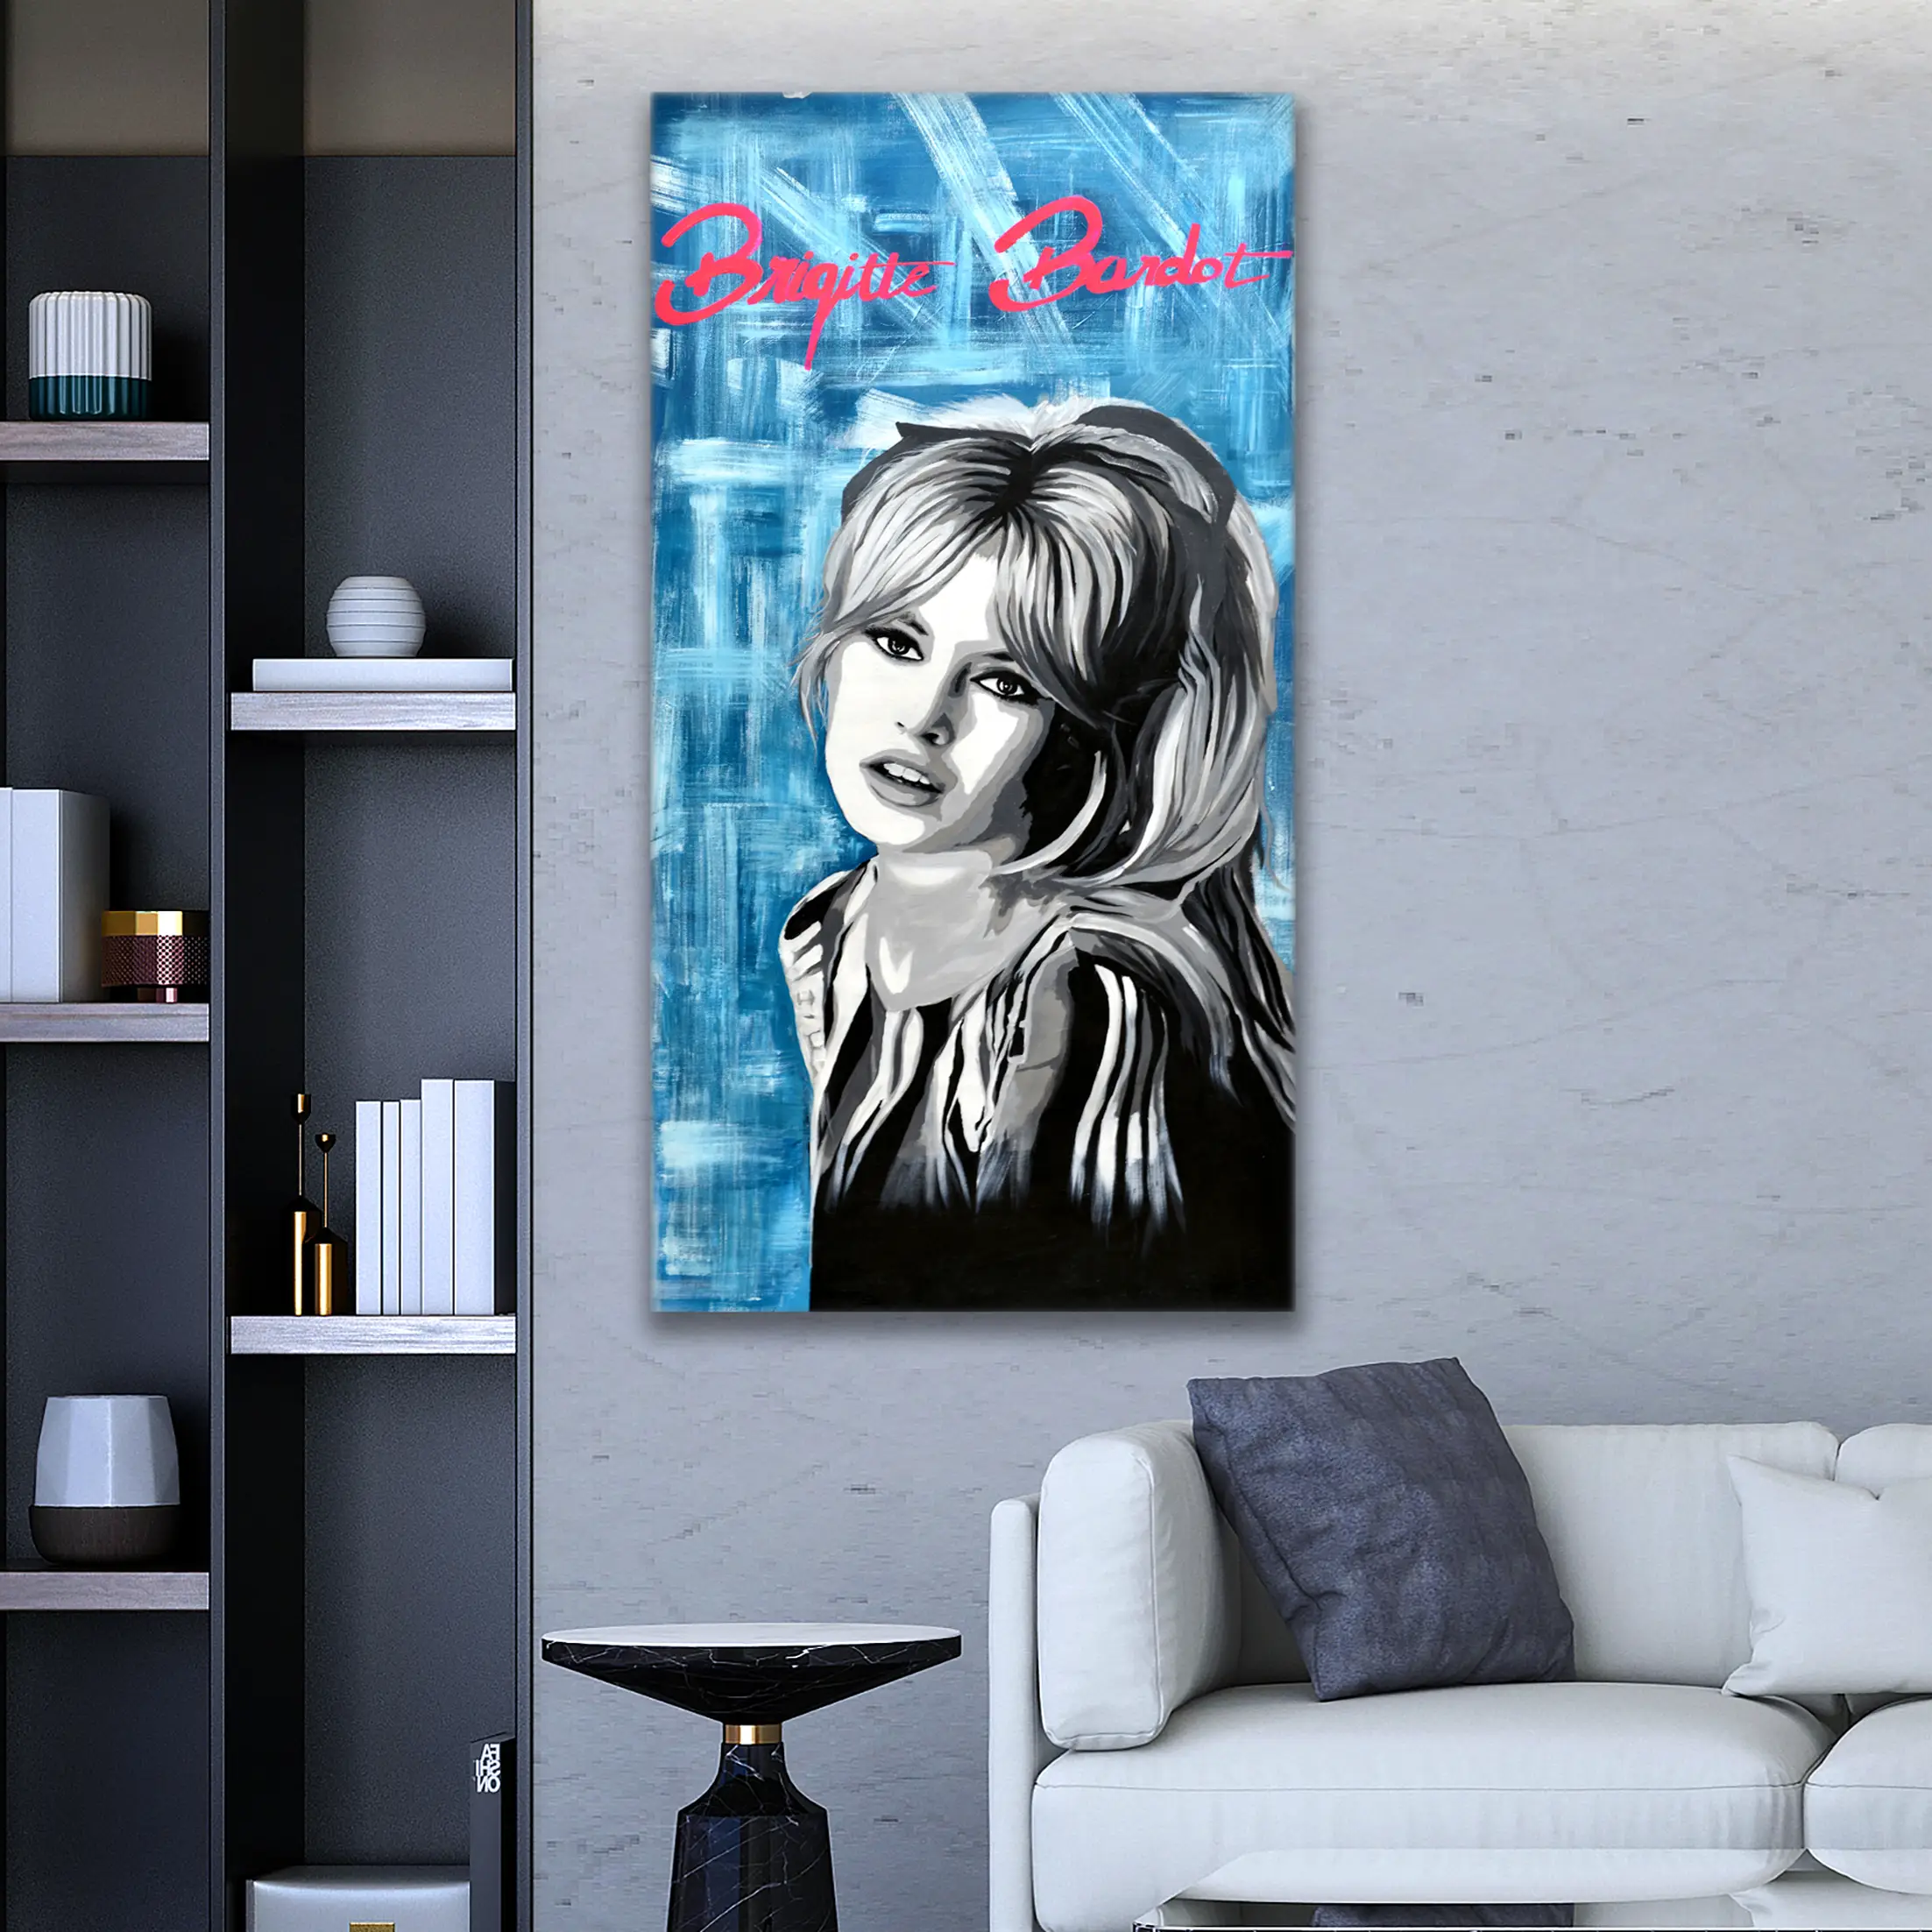 Briqitte Bardot acrylic portrait